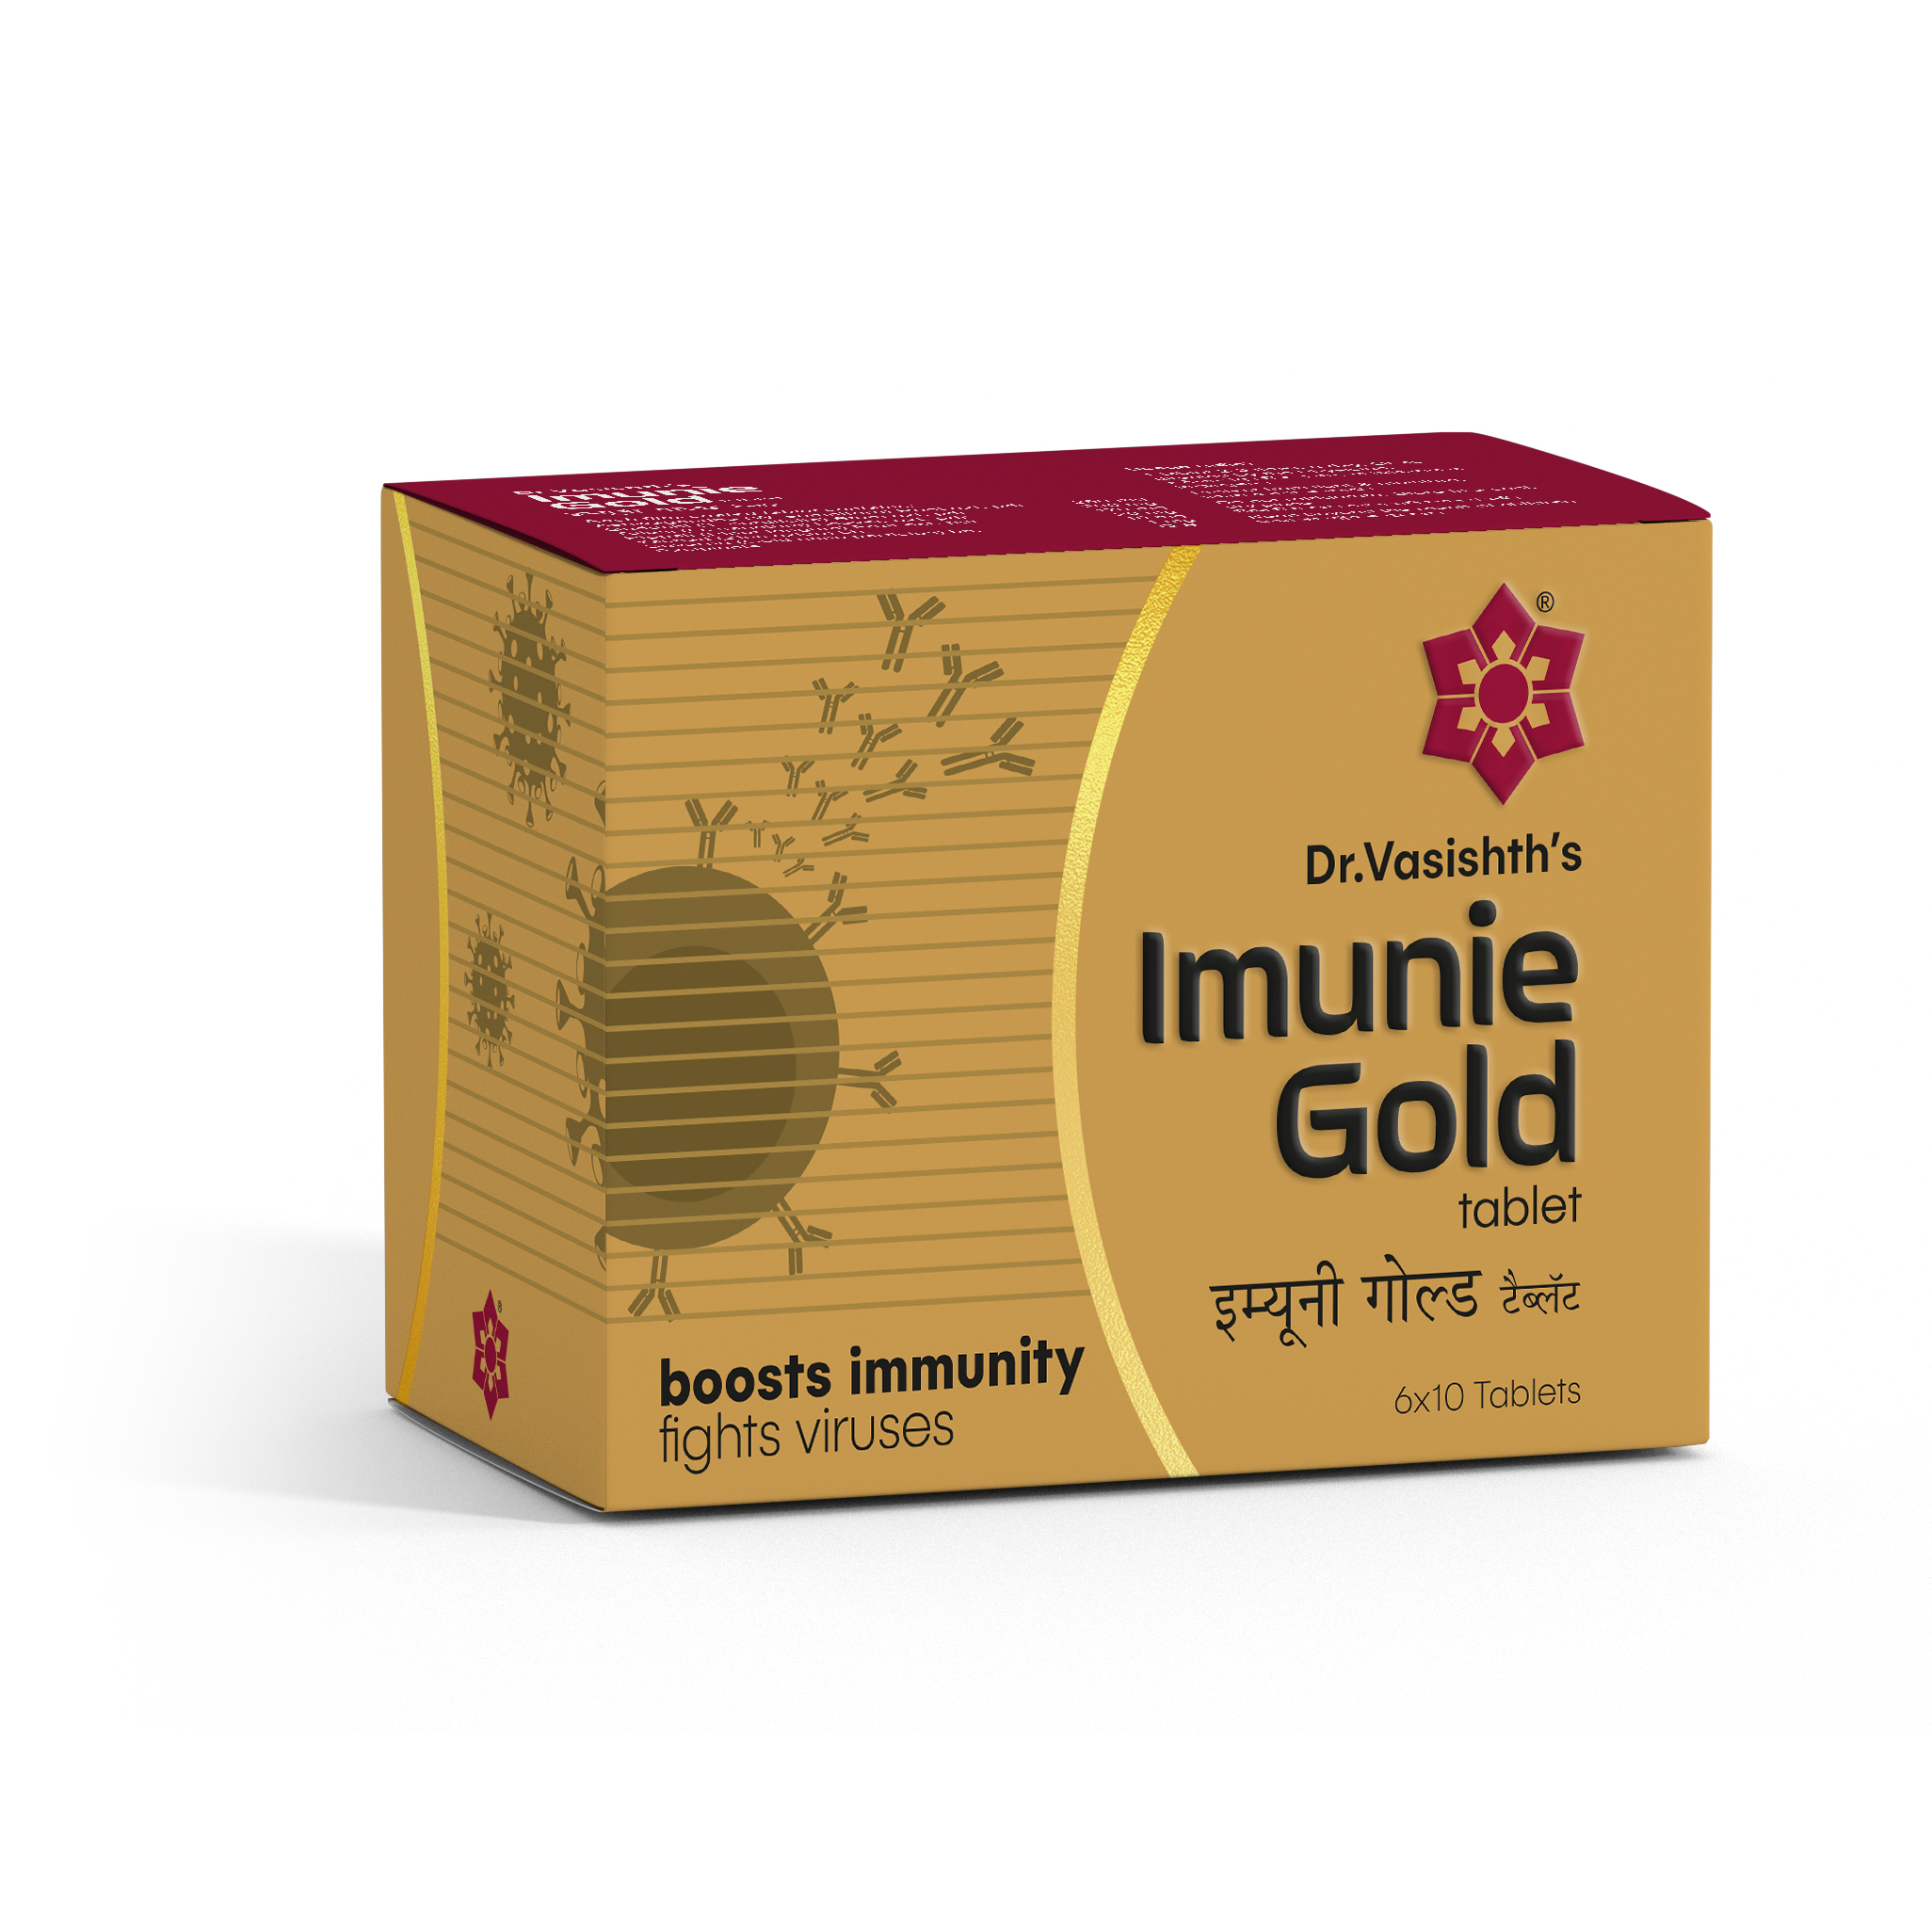 Imunie Gold box_rectangle